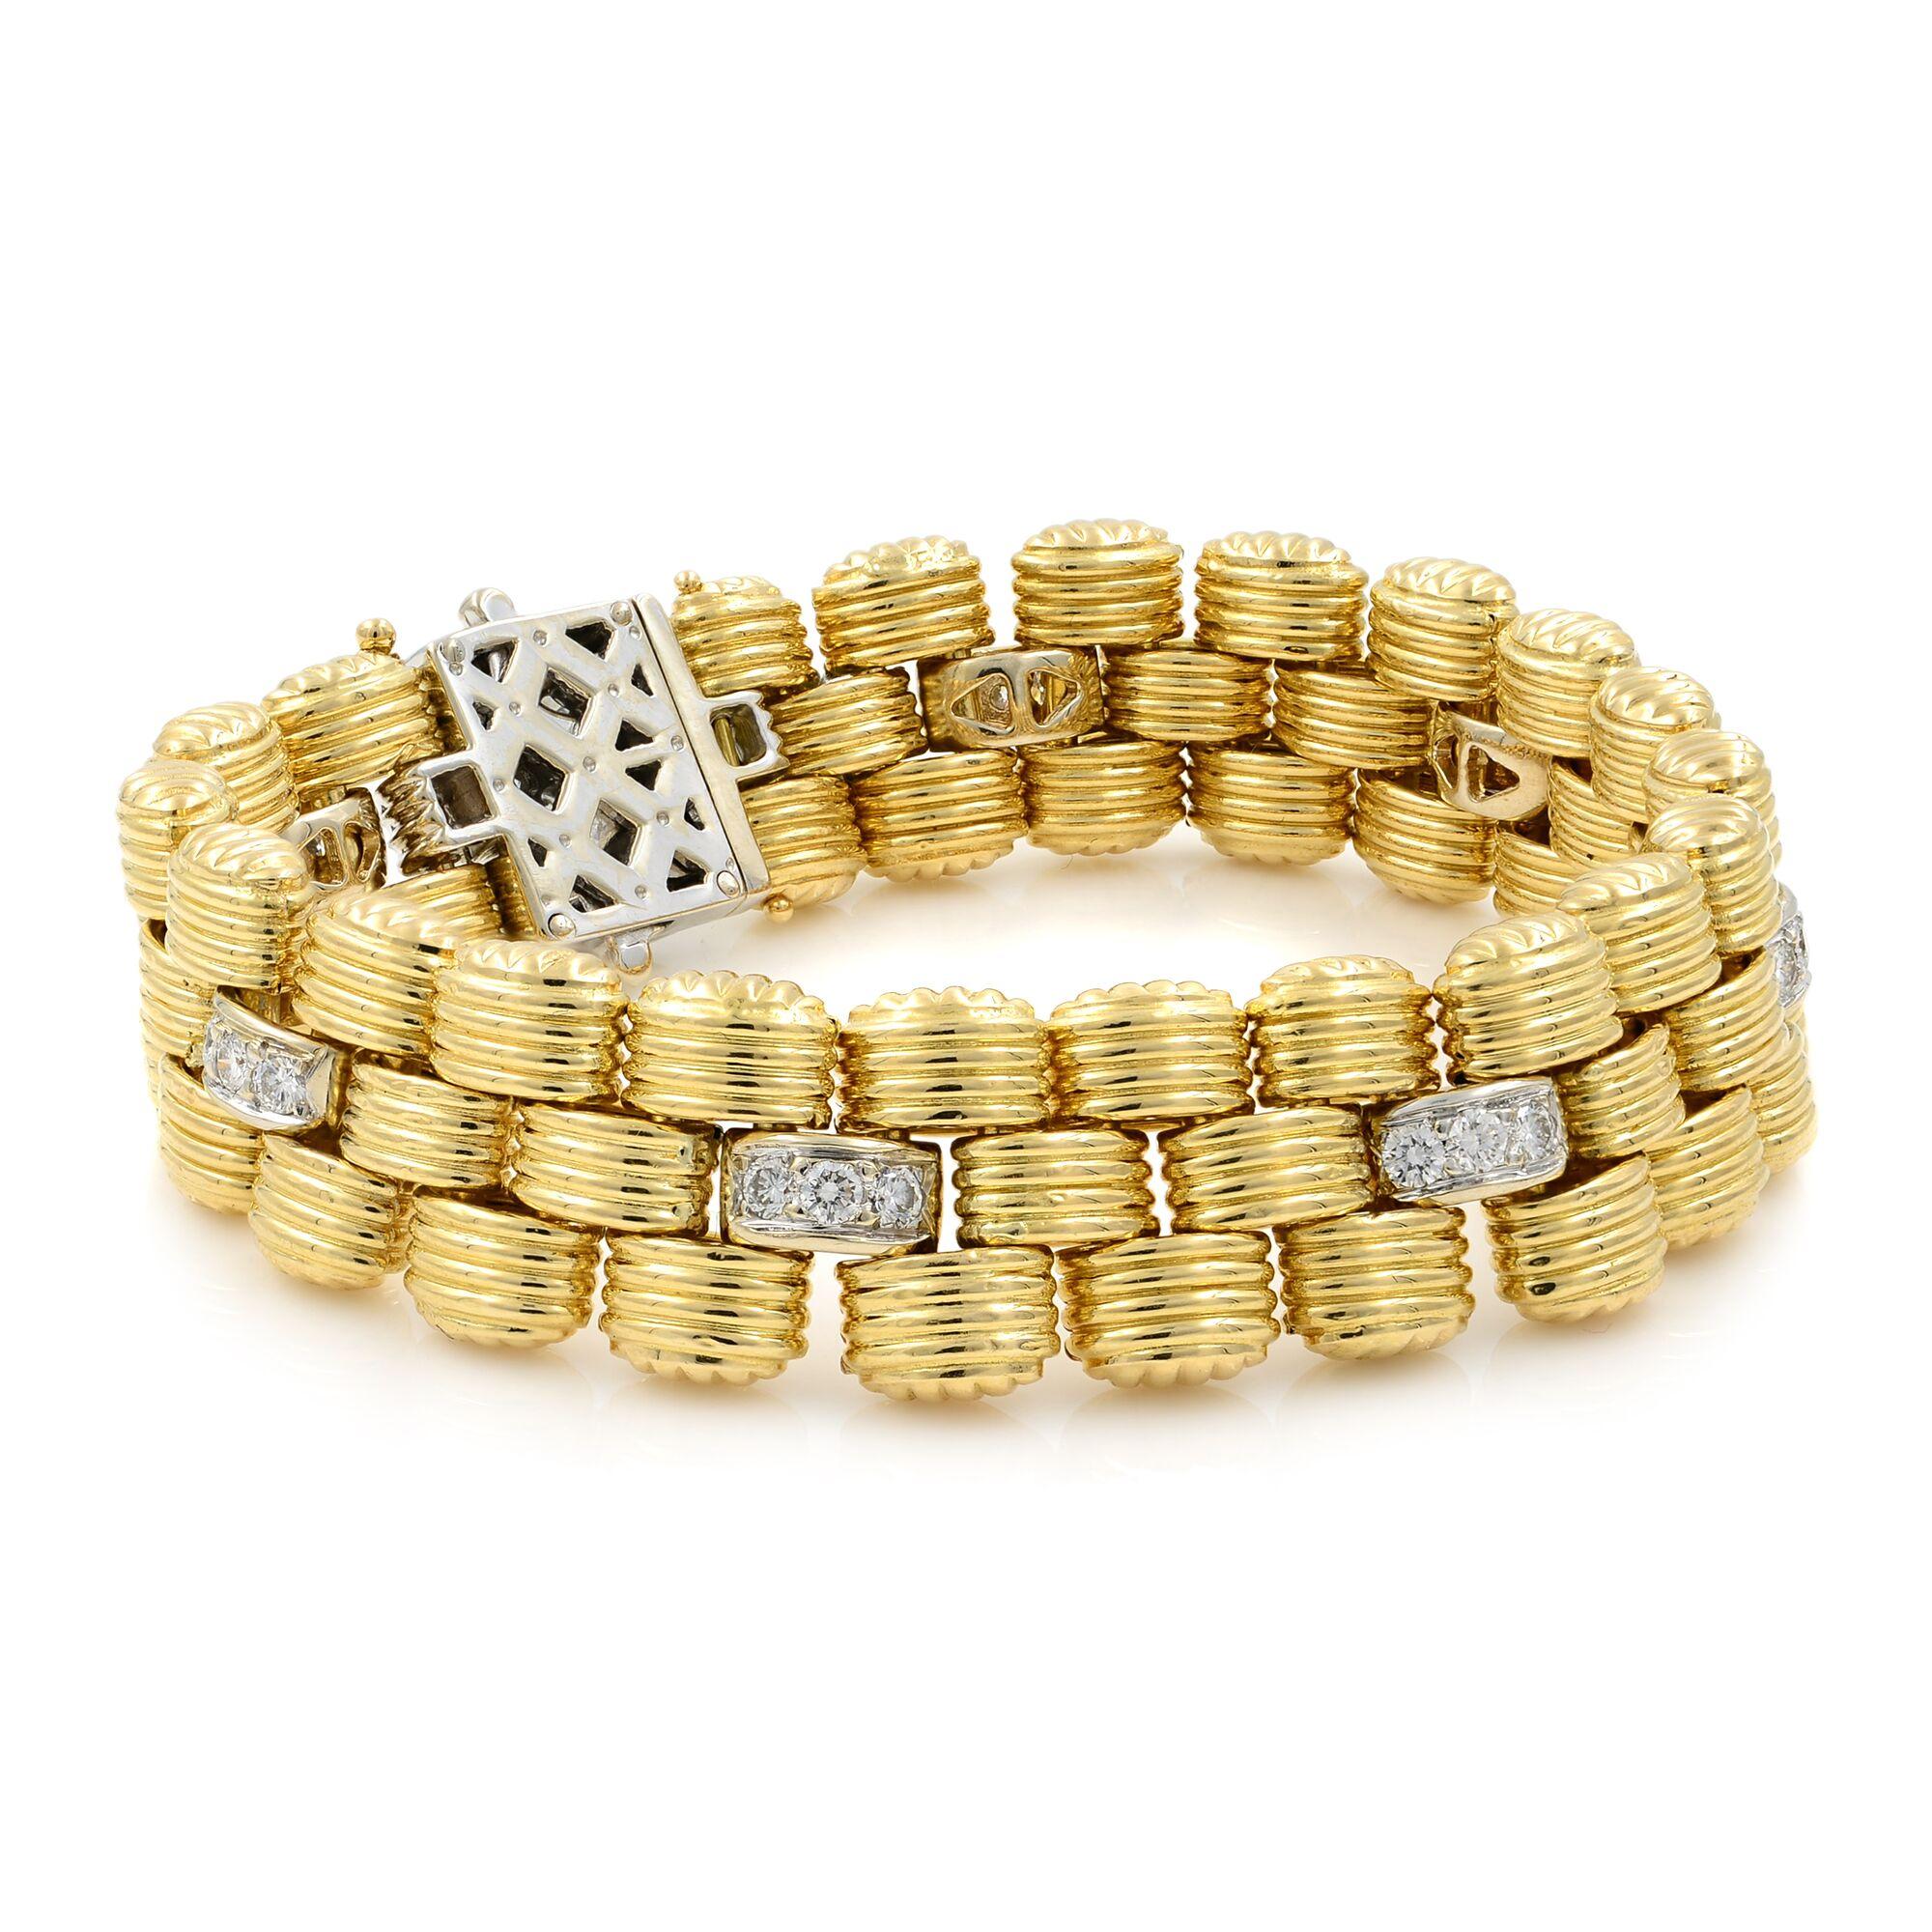 Modern Vintage 18 Karat Yellow and White Gold Link Bracelet with Diamonds 1.50 Carat